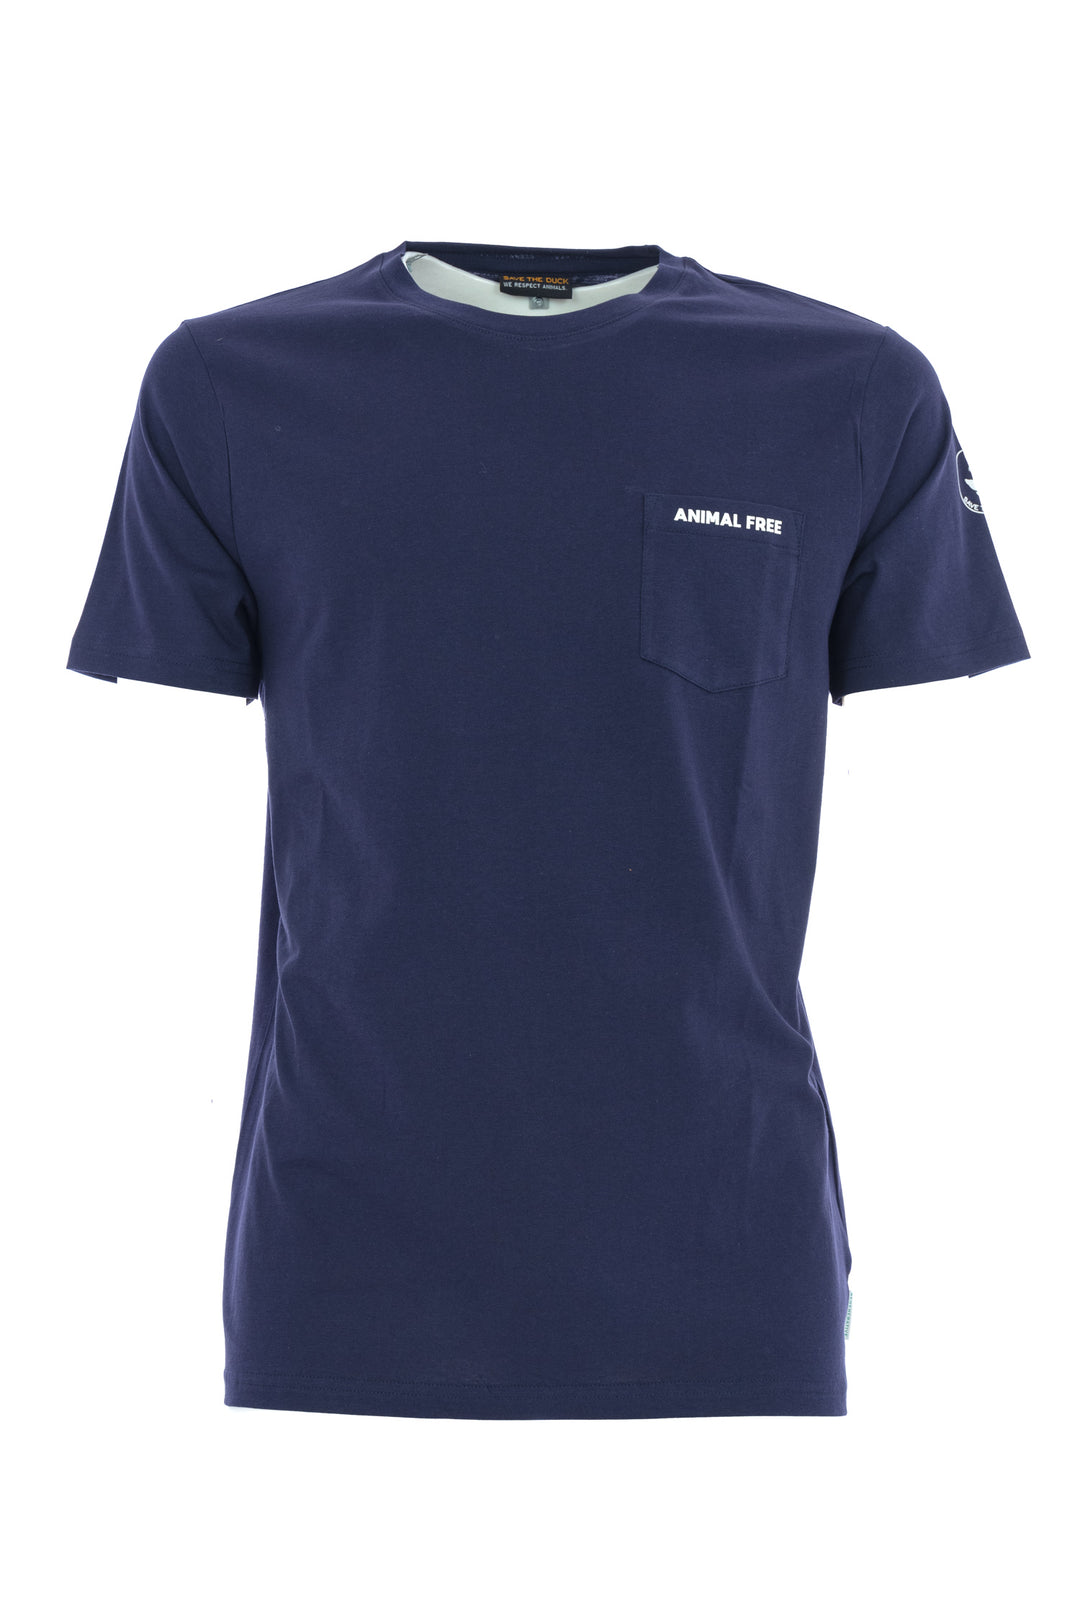 SAVE THE DUCK T-shirt girocollo DAMIEN con tasca sul petto blu navy - Mancinelli 1954